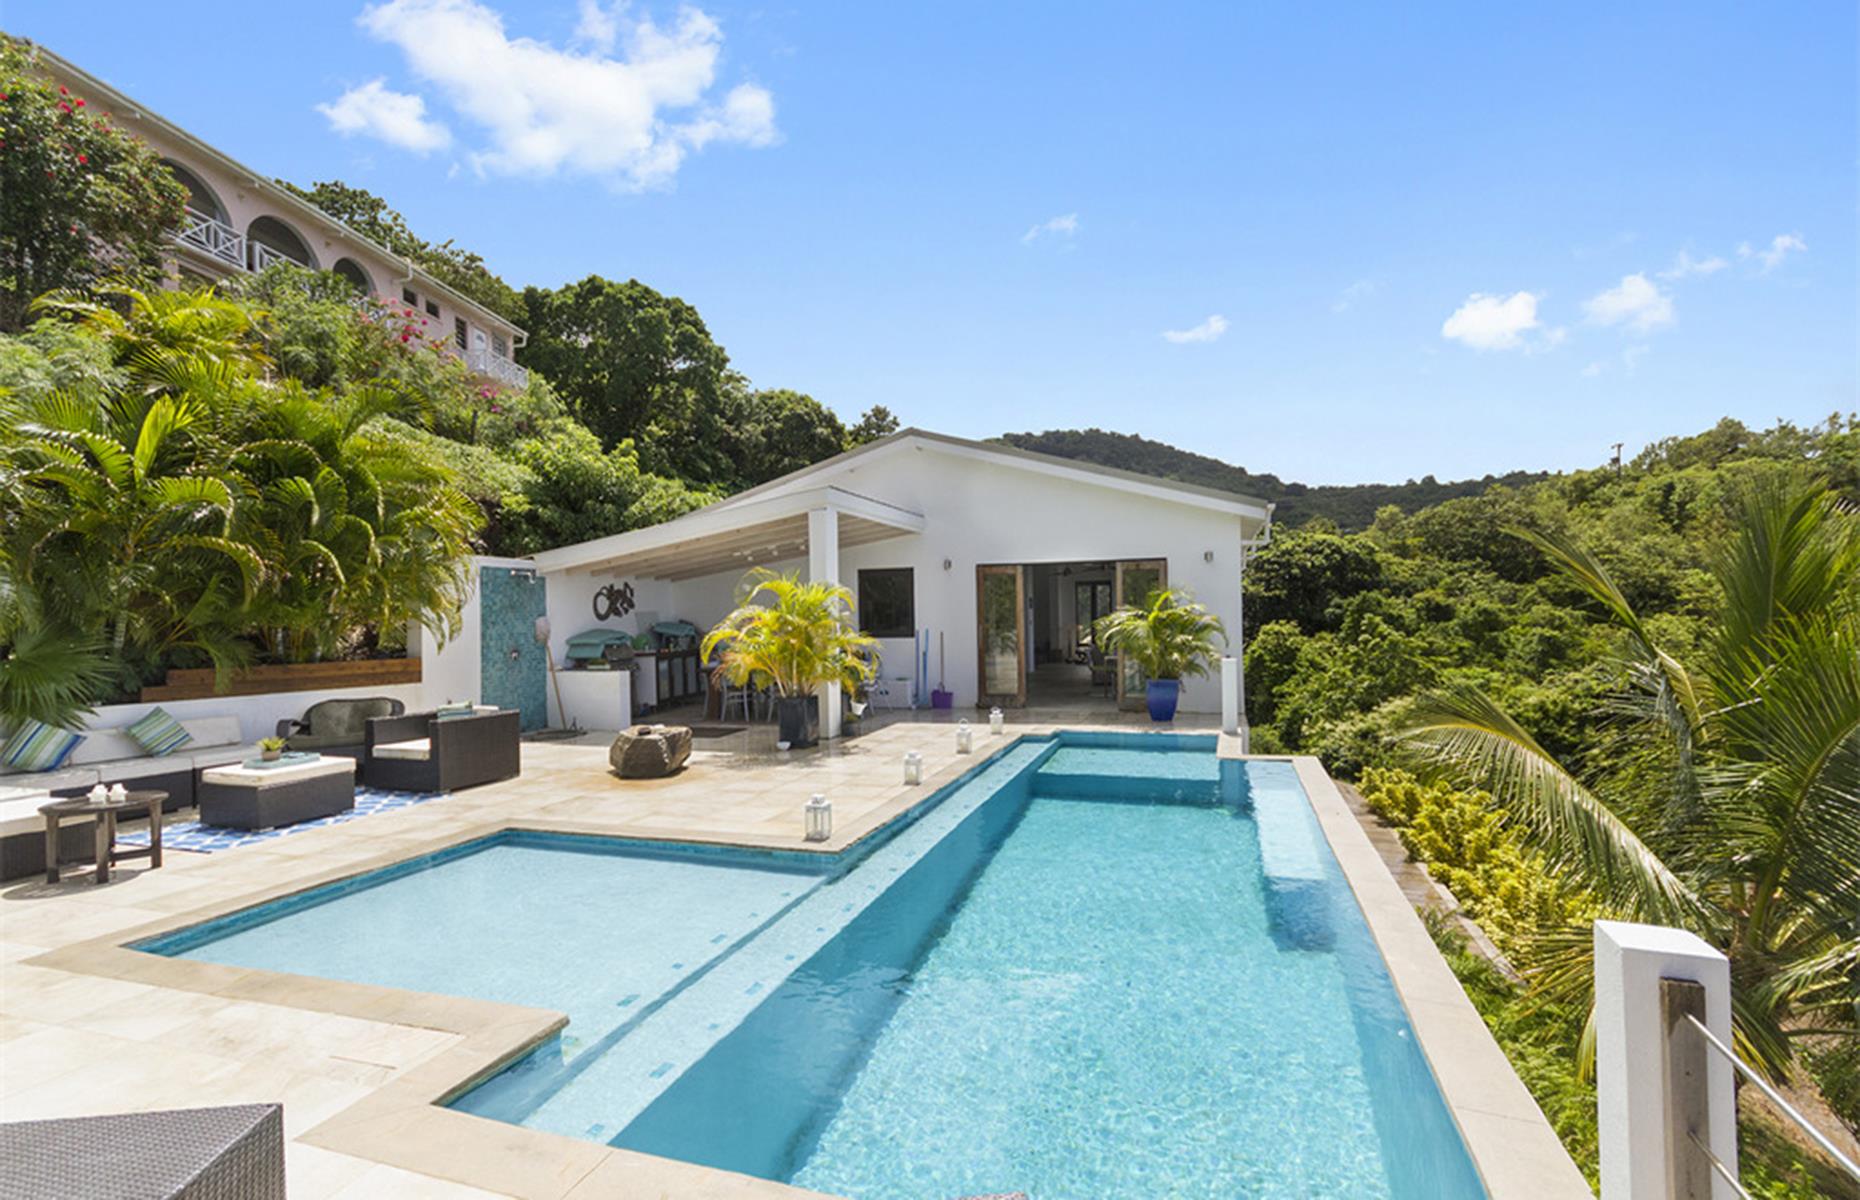 Butu Mountain Villa, Tortola, British Virgin Islands, Caribbean: $845,000 (£622,000)